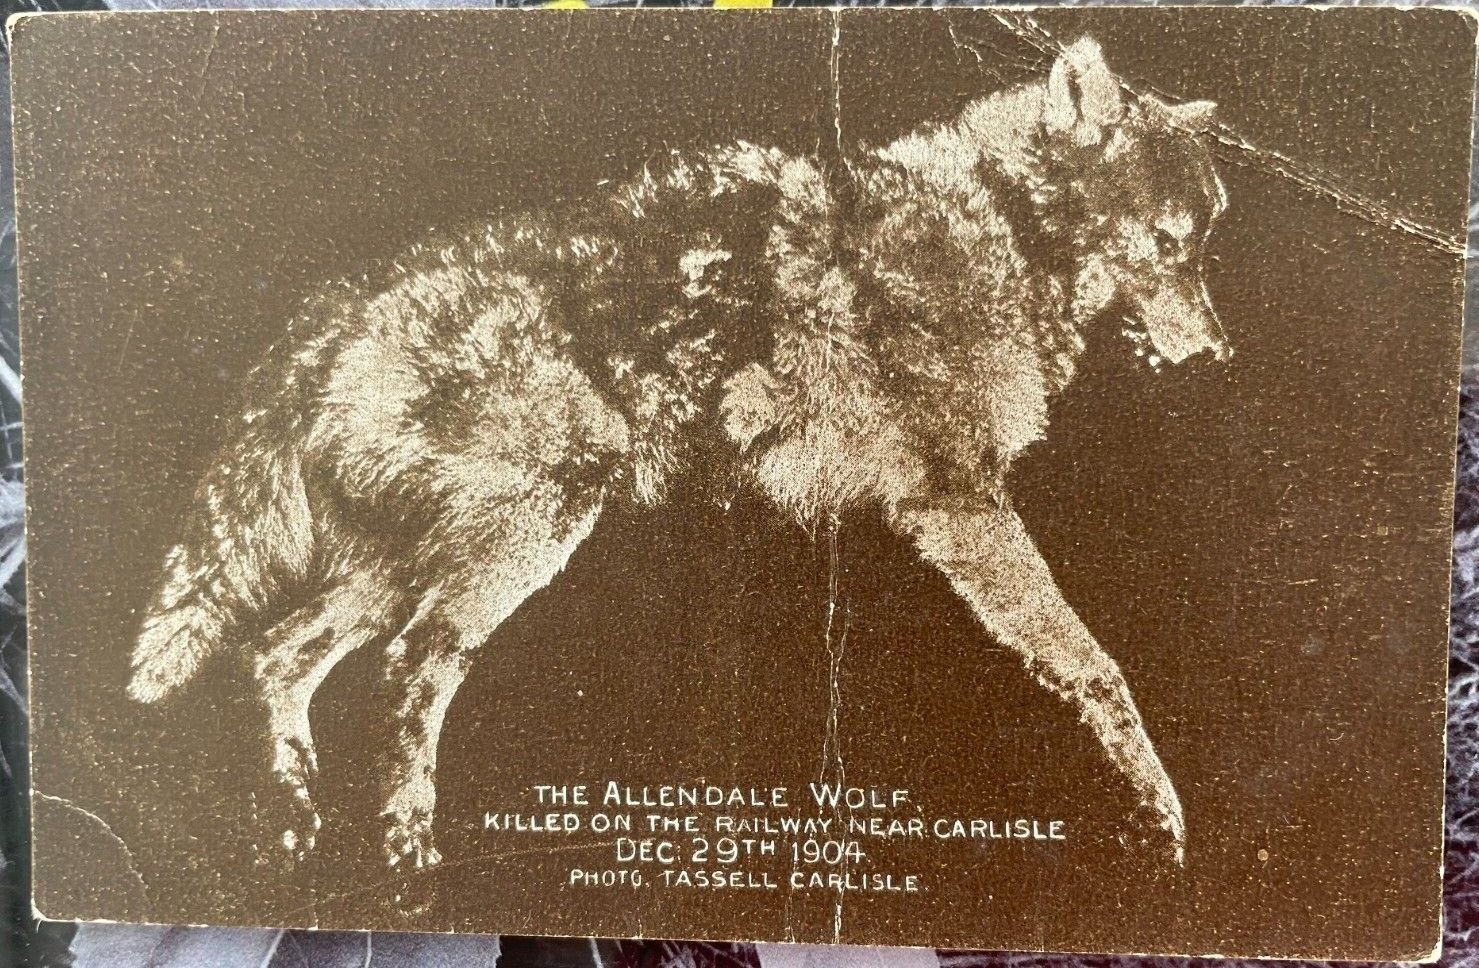 House Clearance - ALLENDALE WOLF KILLED ON THE RAILWAY NR CARLISLE 1904 PHOTO TASSELL CARLISLE